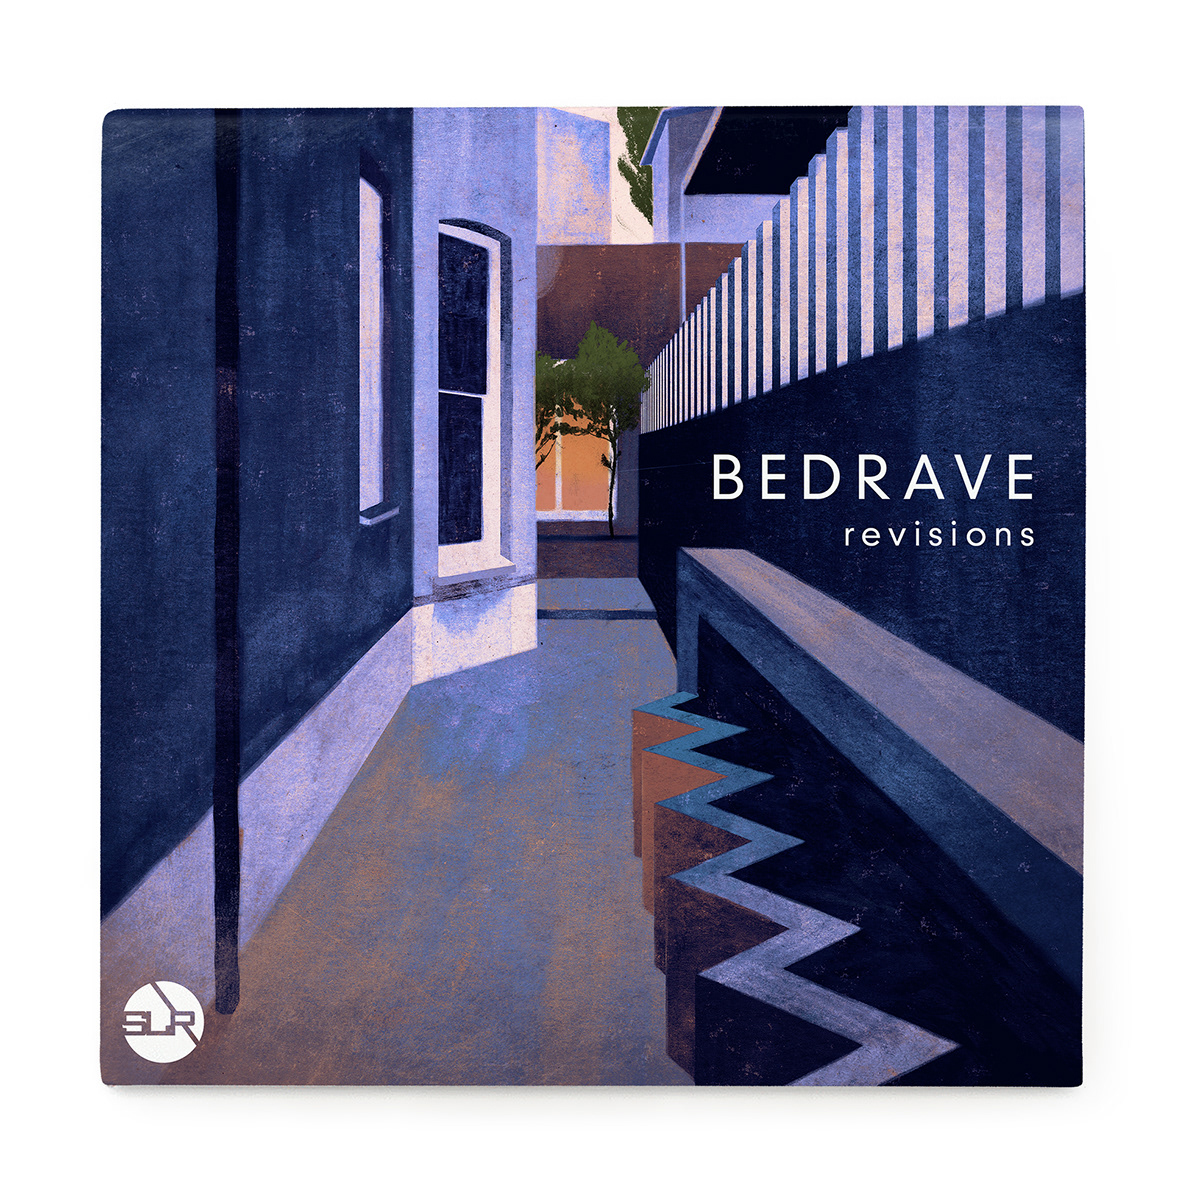 album artwork alleyway Bedrave DAWN ILLUSTRATION  Owen Gent painting   record sleeve Sub-Label recordings vinyl